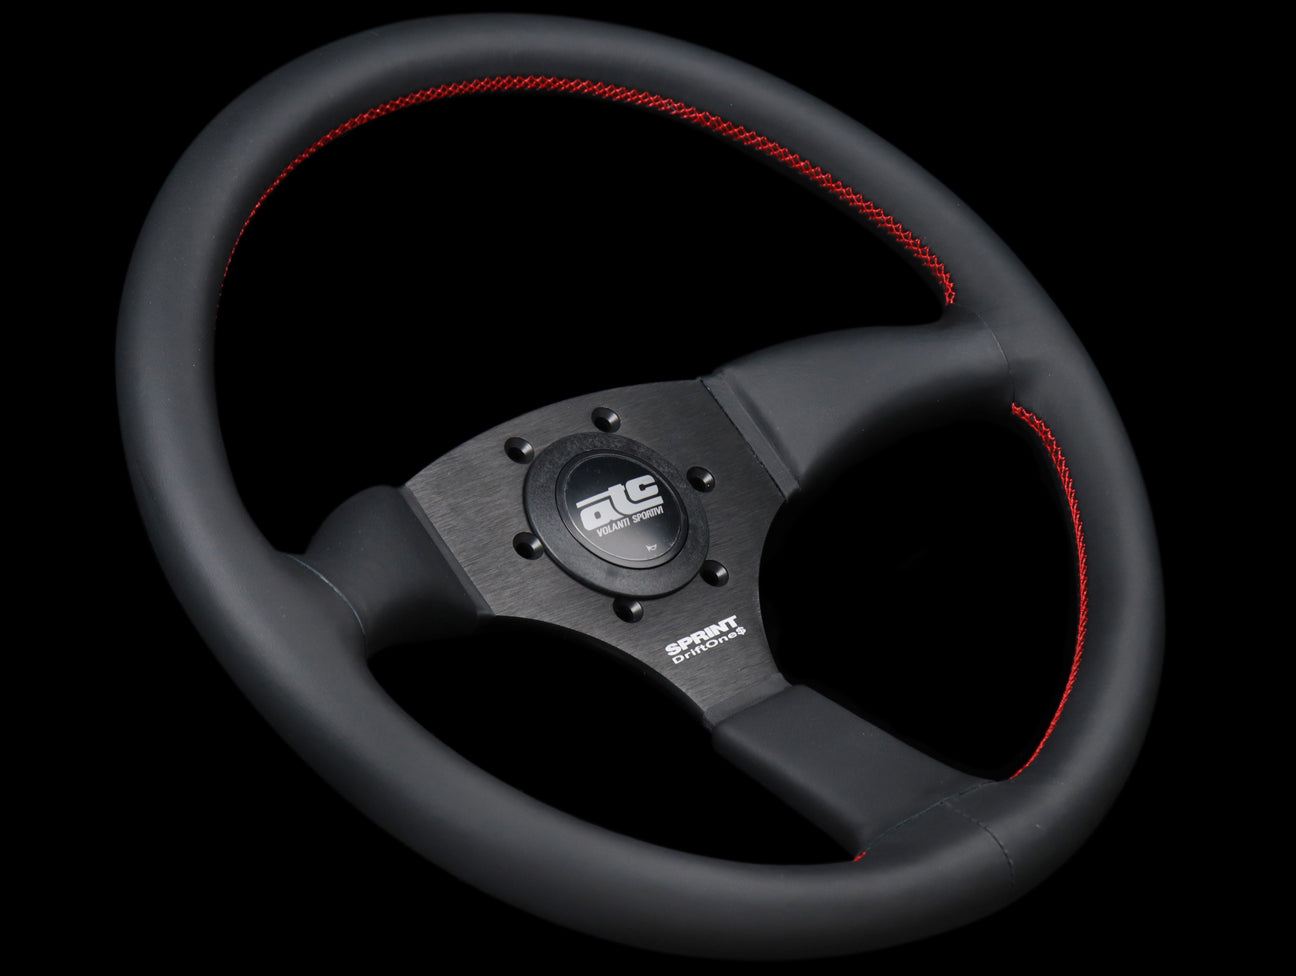 ATC Sprint Rallye Steering Wheel - 330MM Blue Stitch